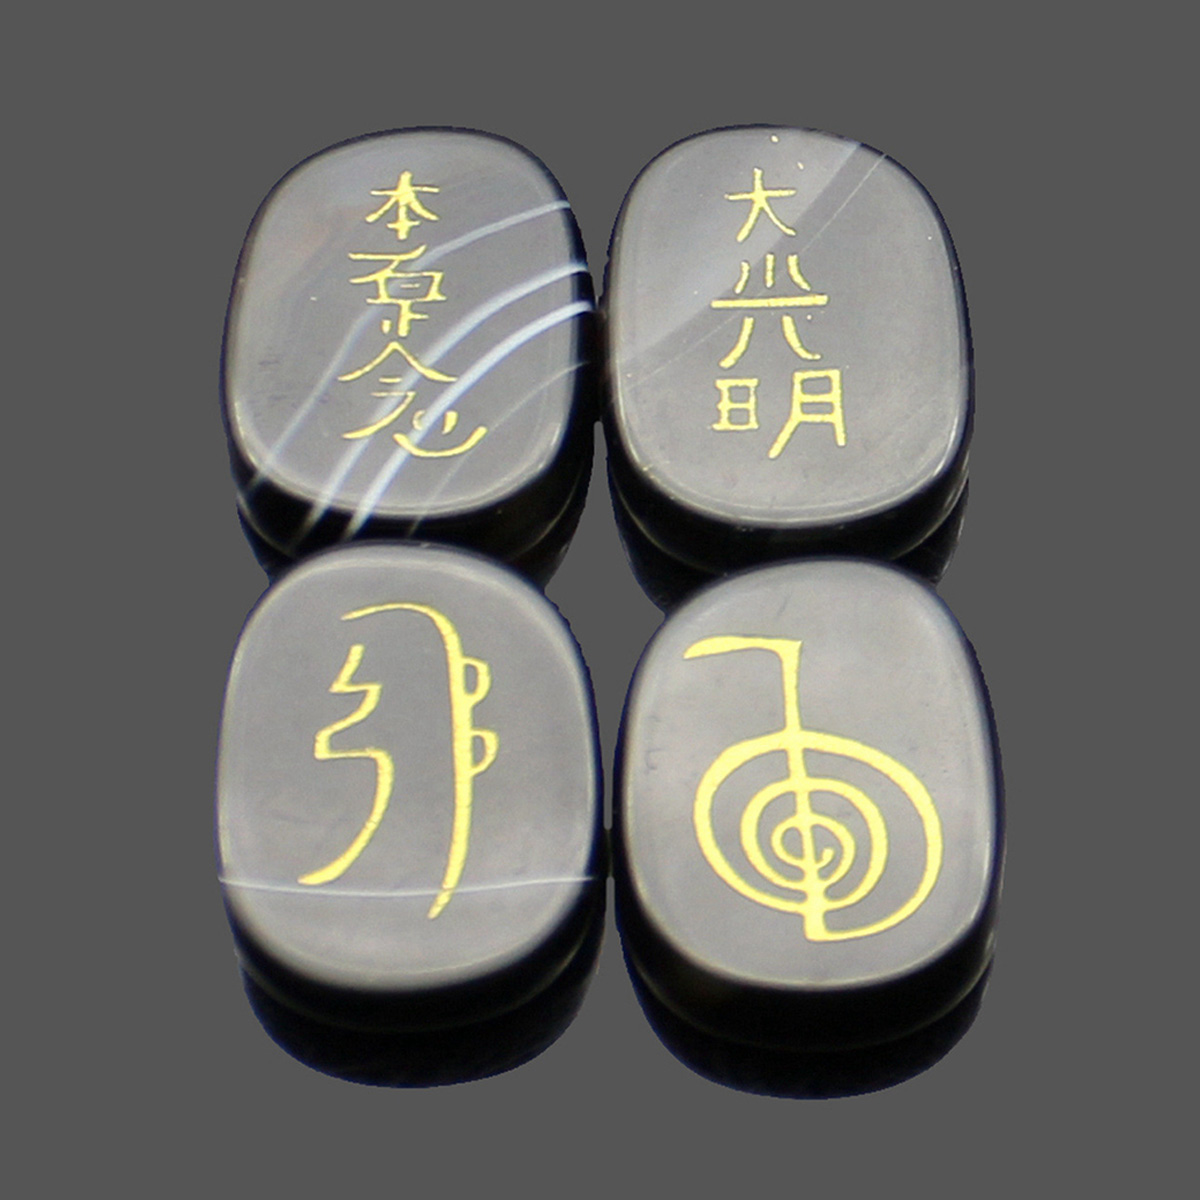 4Pcs/set Natural Gemstone Energy Crystal Stone Chinese Stlye Engraved Usui Reiki Symbol Healing Yoga Irregular Stones Home Decor